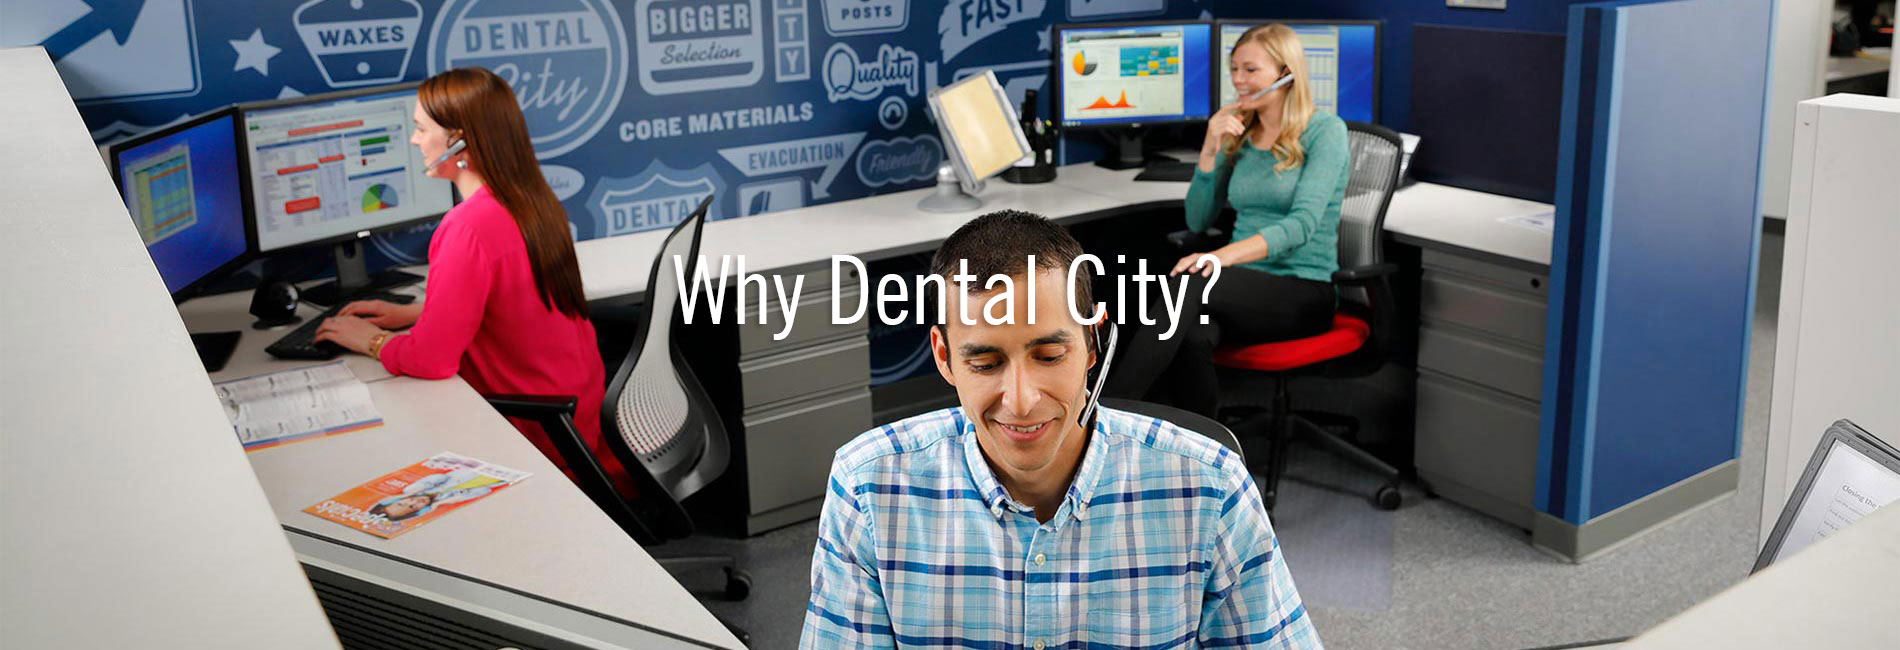 Why Dental City?